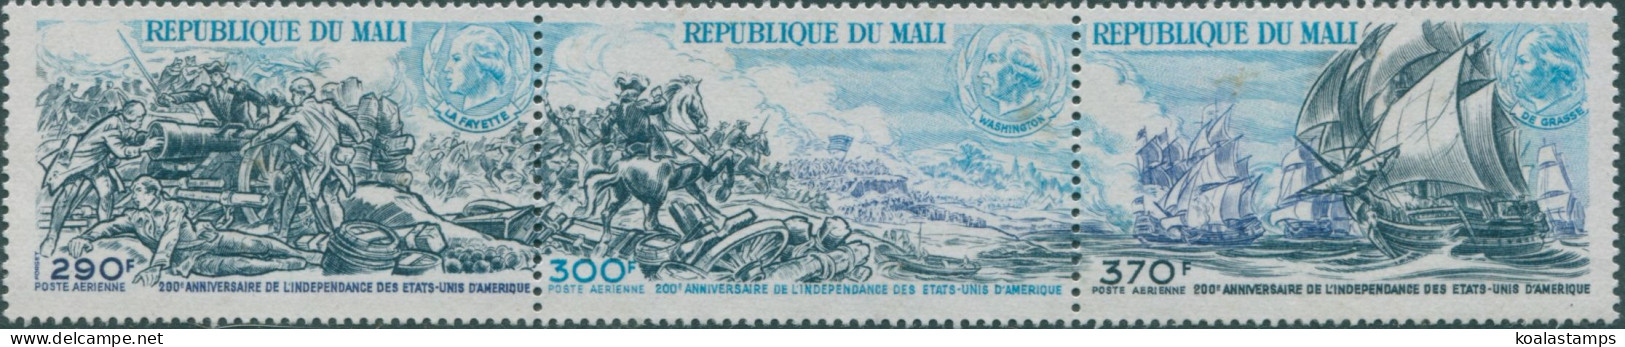 Mali 1975 SG501-503 American Revolution Set MNH - Mali (1959-...)